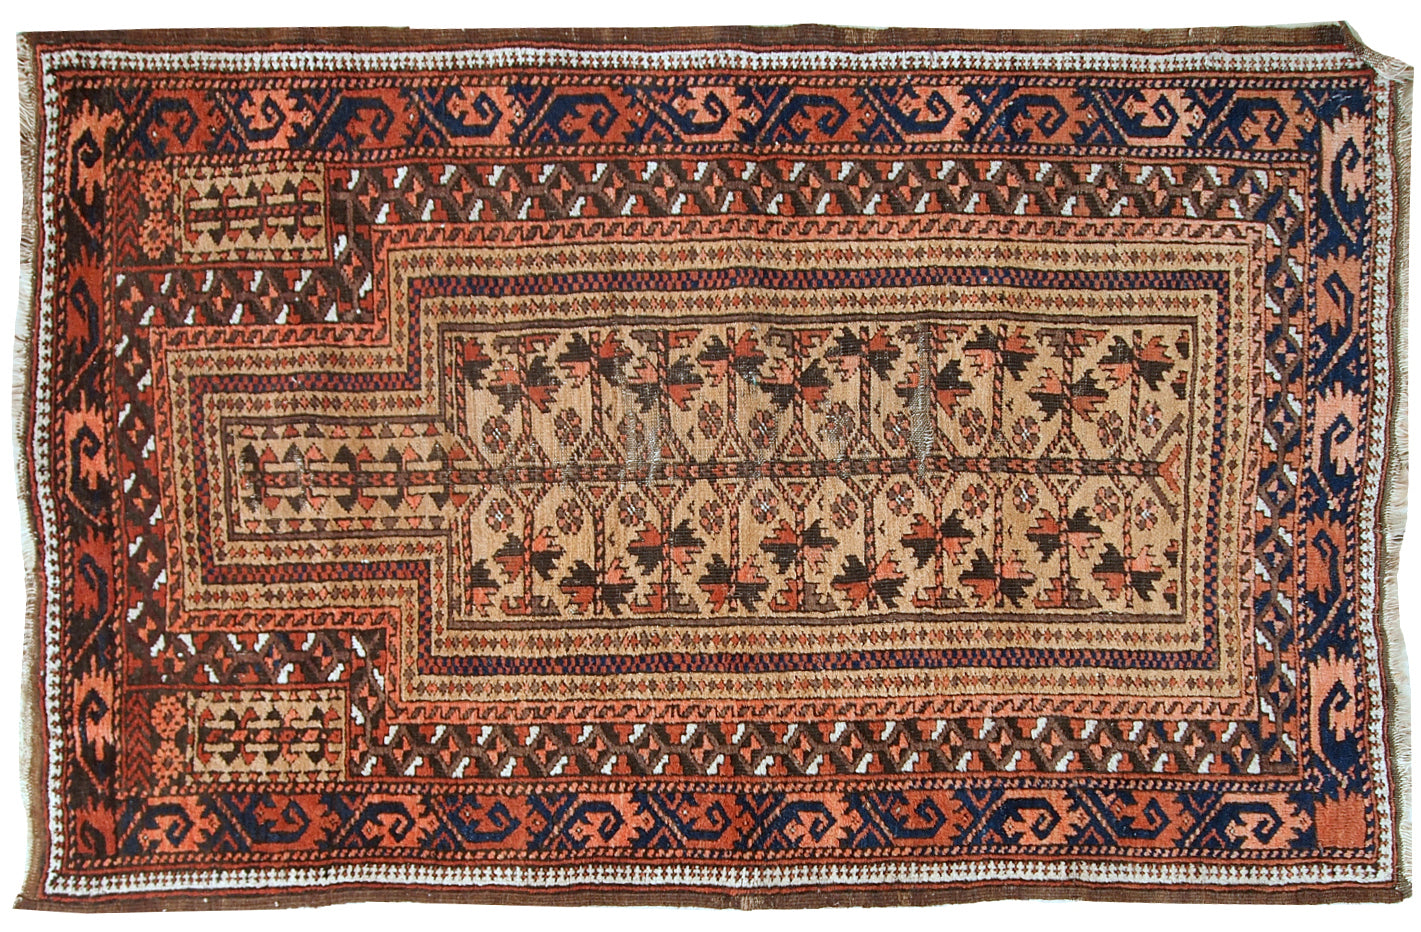 Handmade antique Afghan Baluch prayer rug 2.9' x 4.8' (90cm x 146cm) 1900s - 1C529